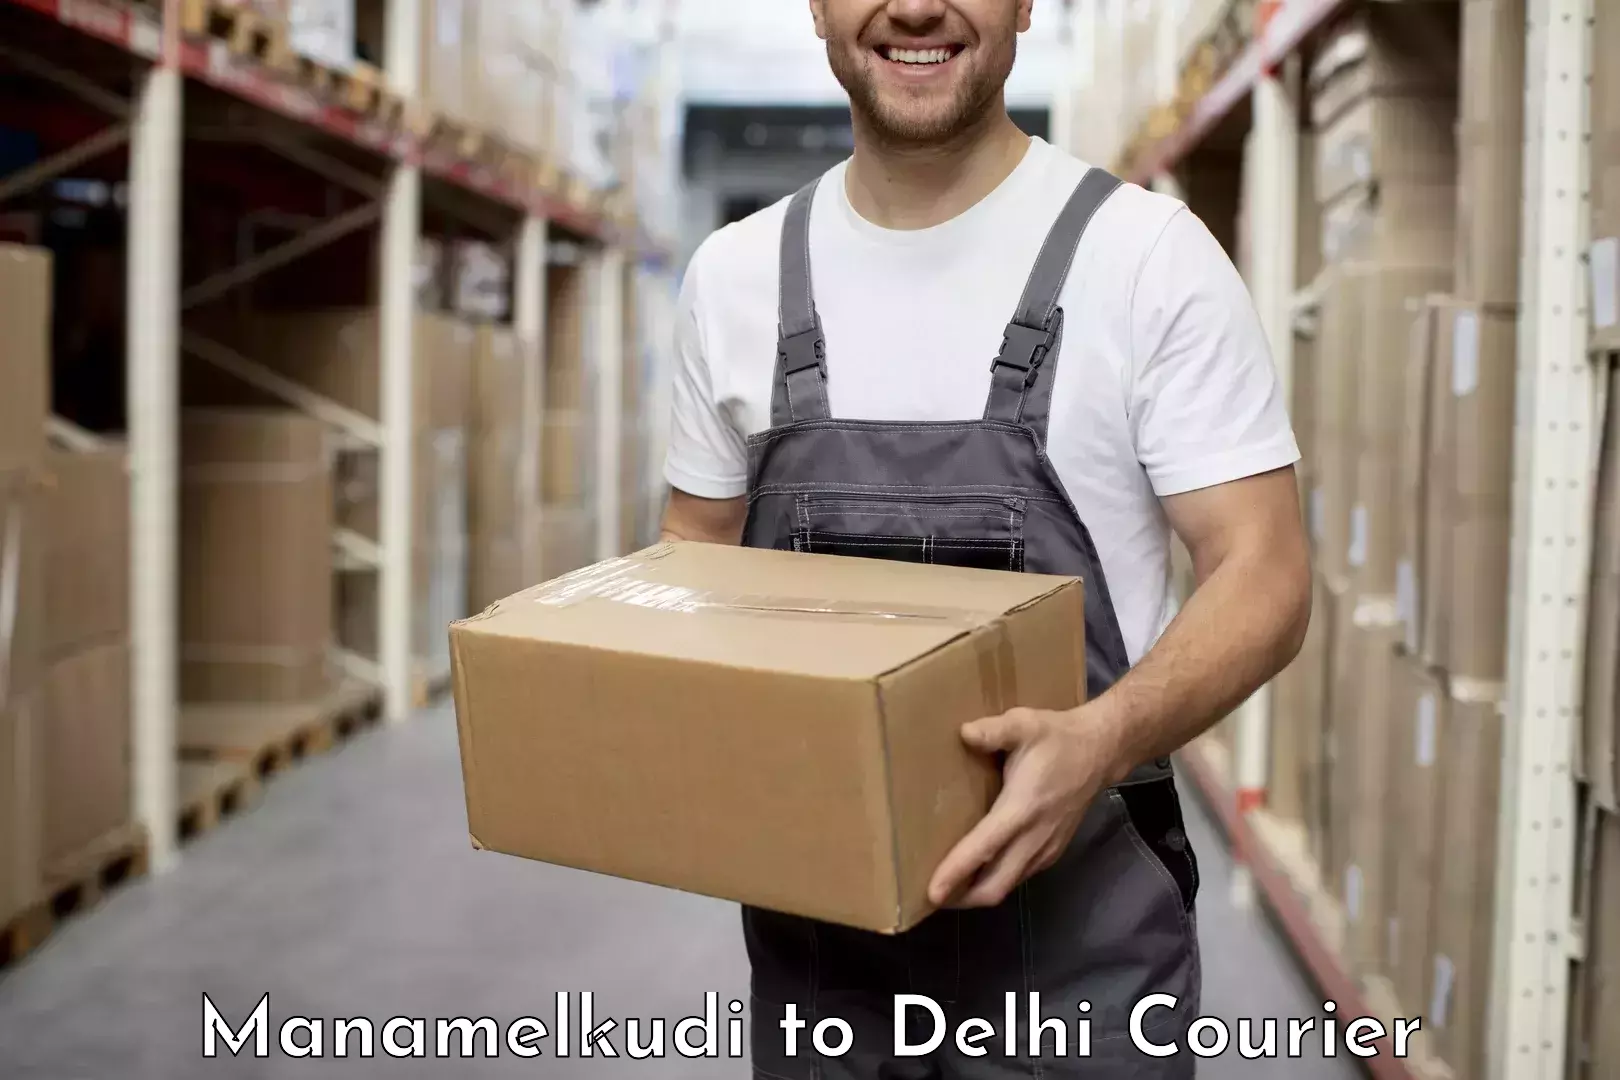 Doorstep delivery service Manamelkudi to University of Delhi